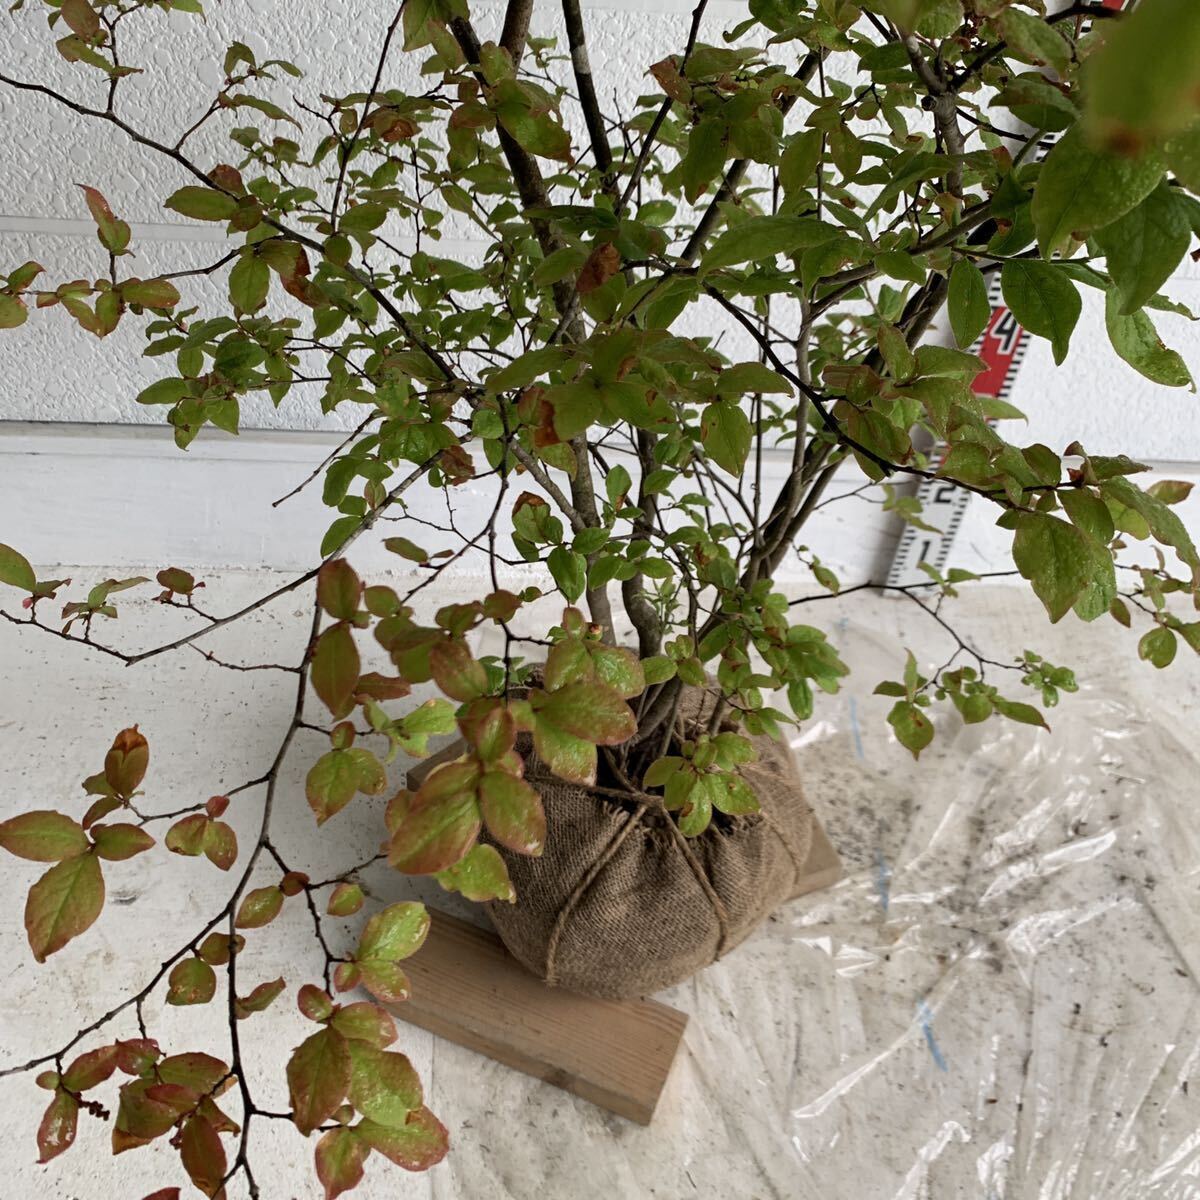  large stock oldham blueberry approximately :190cm [ stock ../ deciduous tree / plant / garden tree / symbol tree / fruit tree seedling ]403357